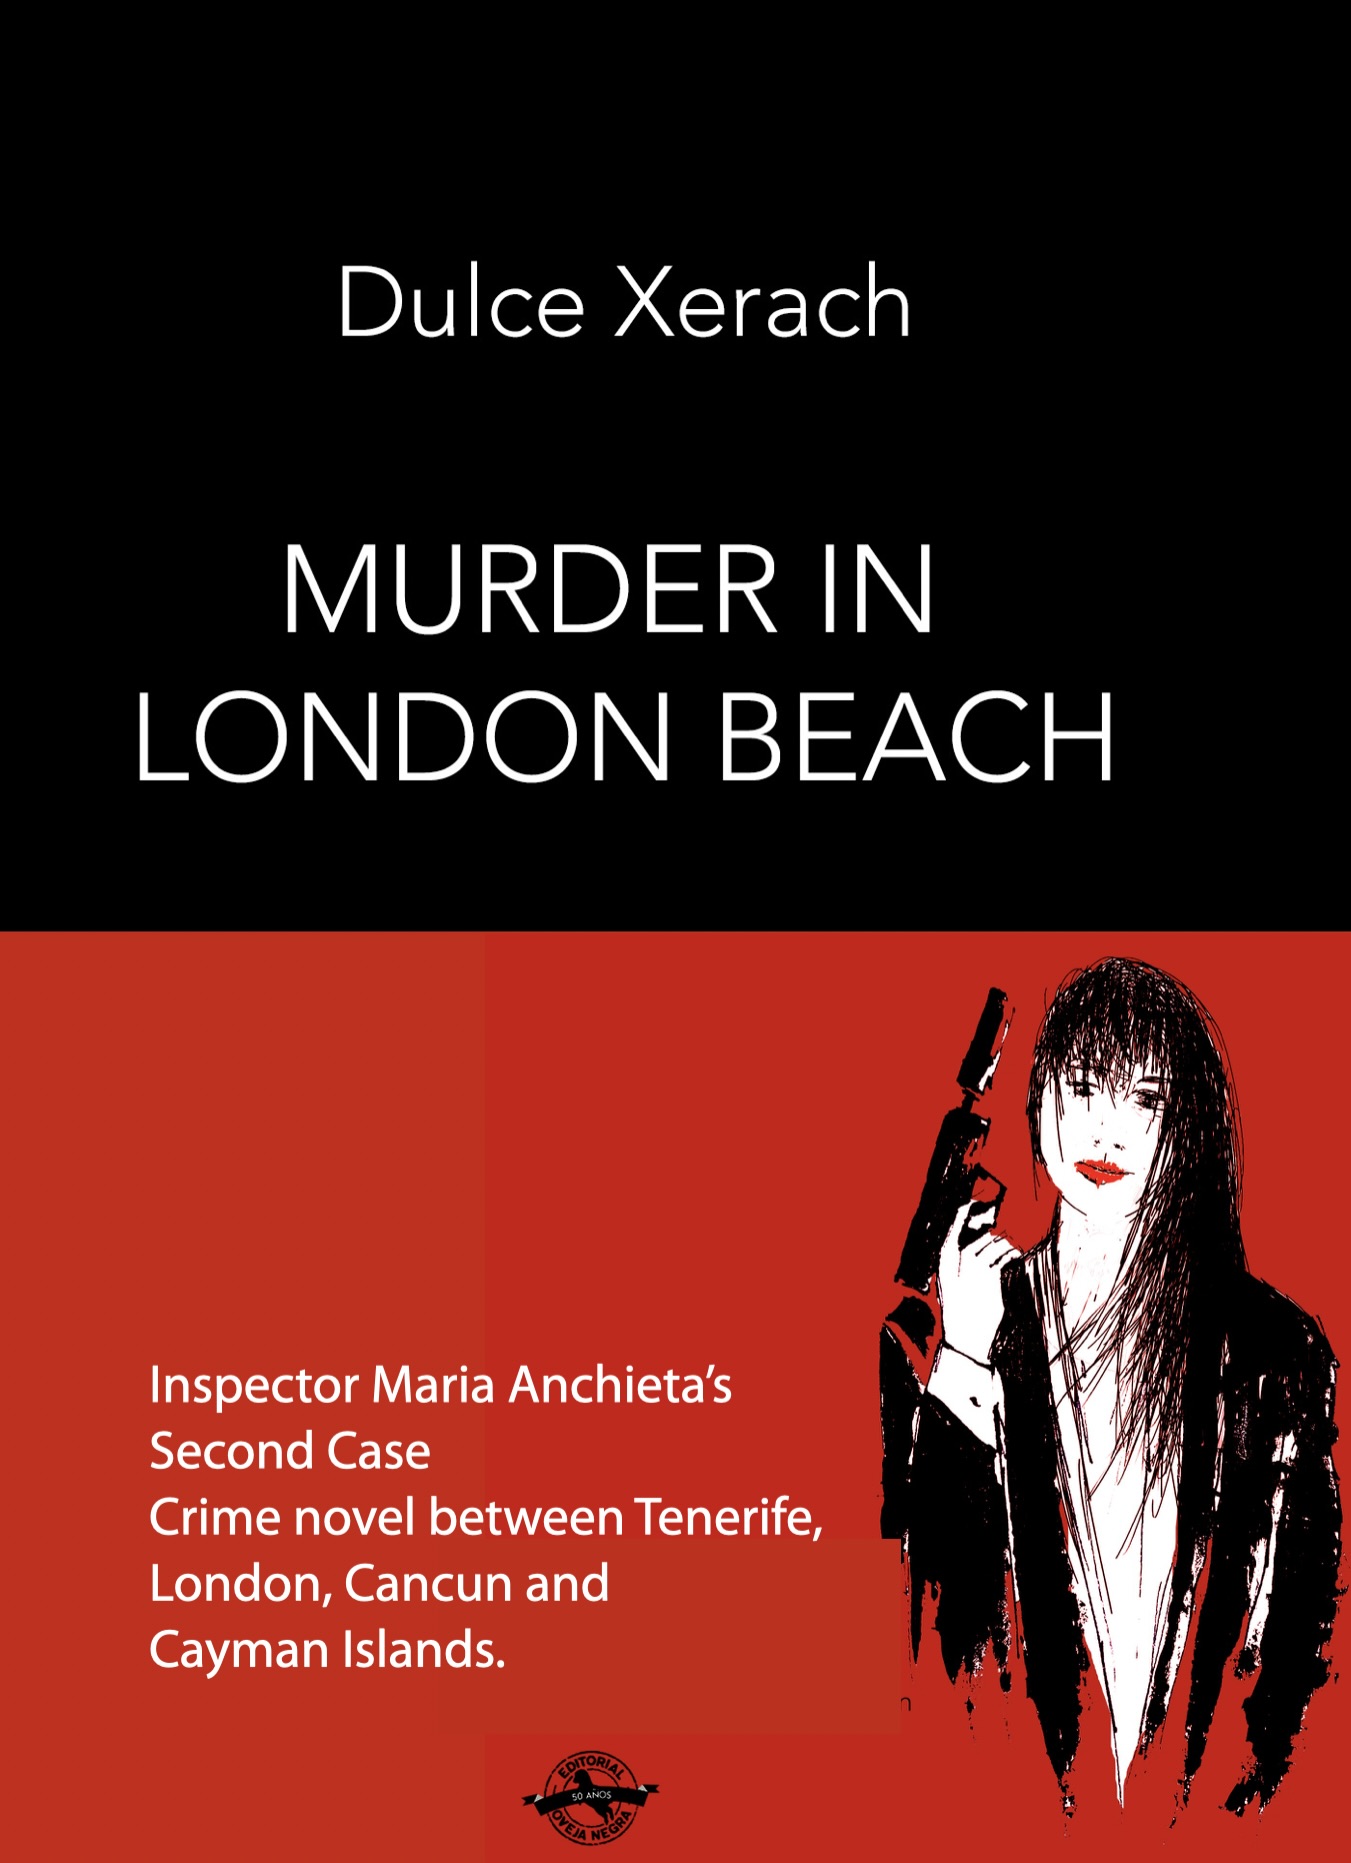 Murder in a London Beach